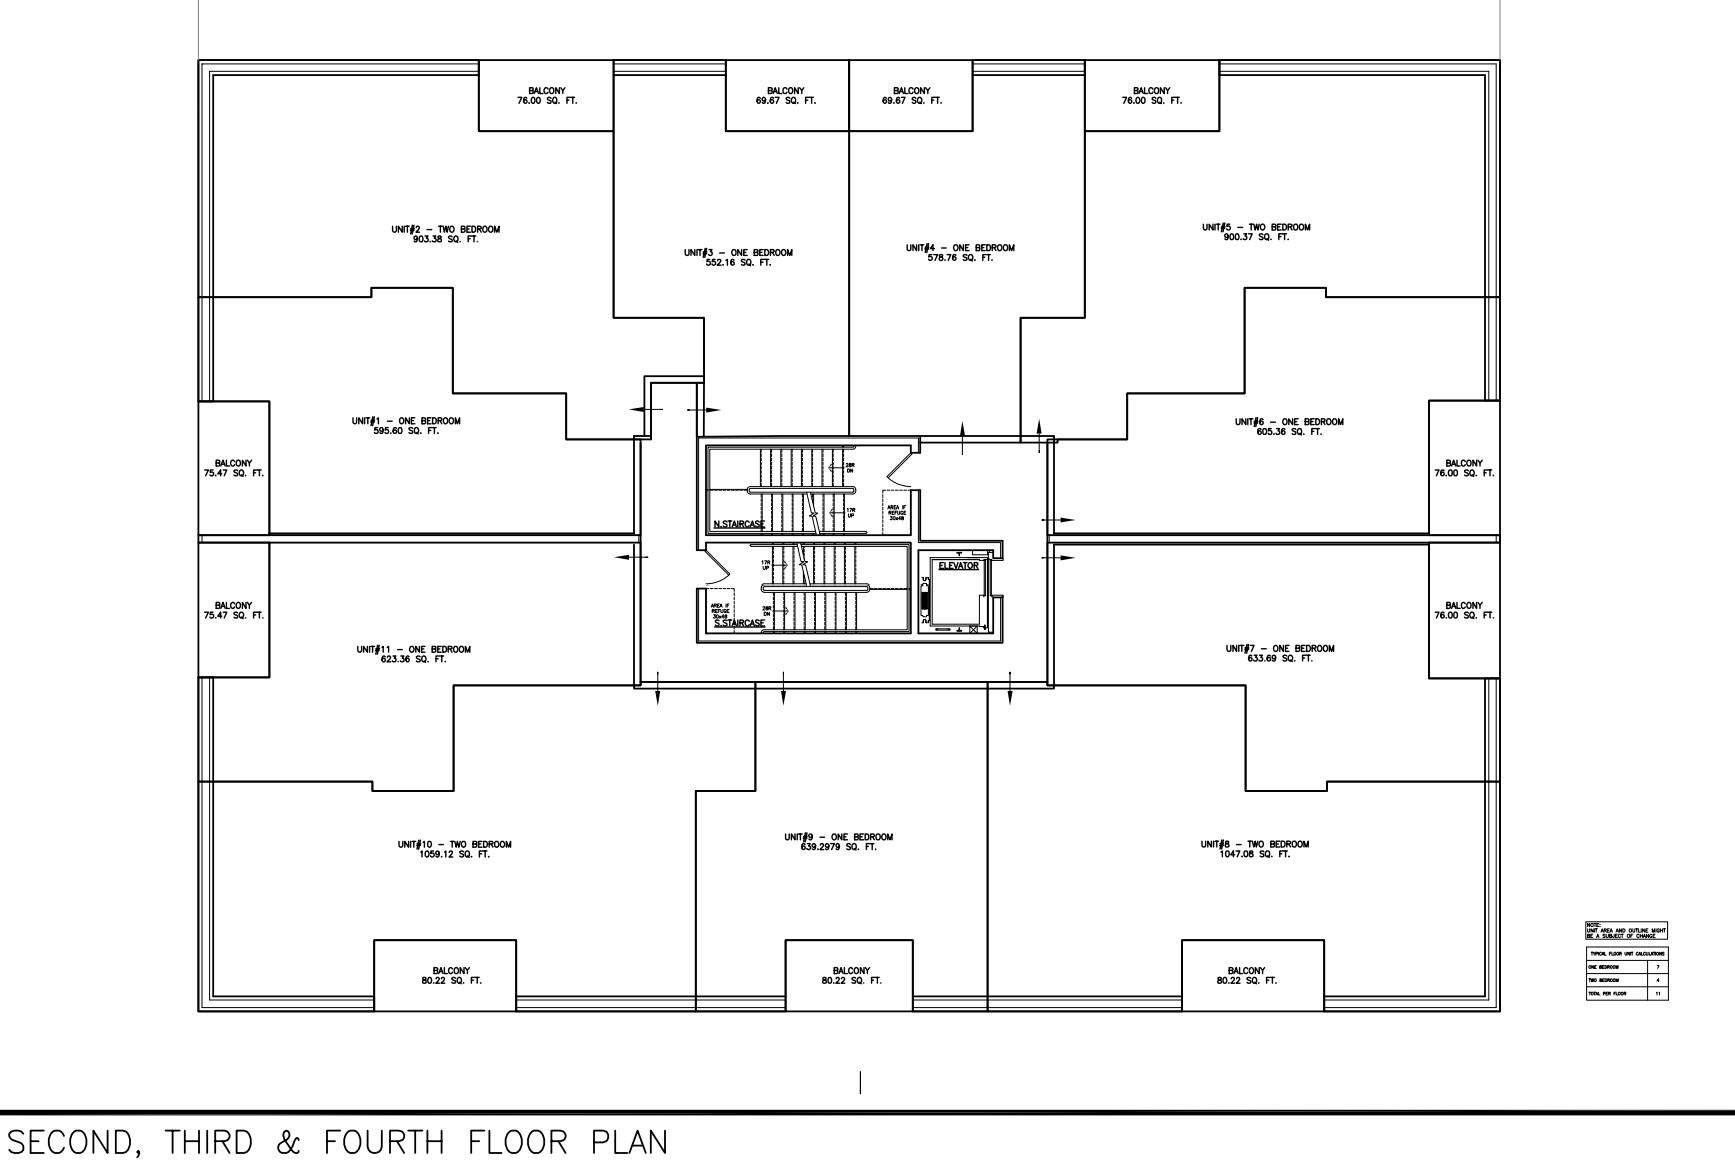 1138 W Belmont Avenue typical floor plan